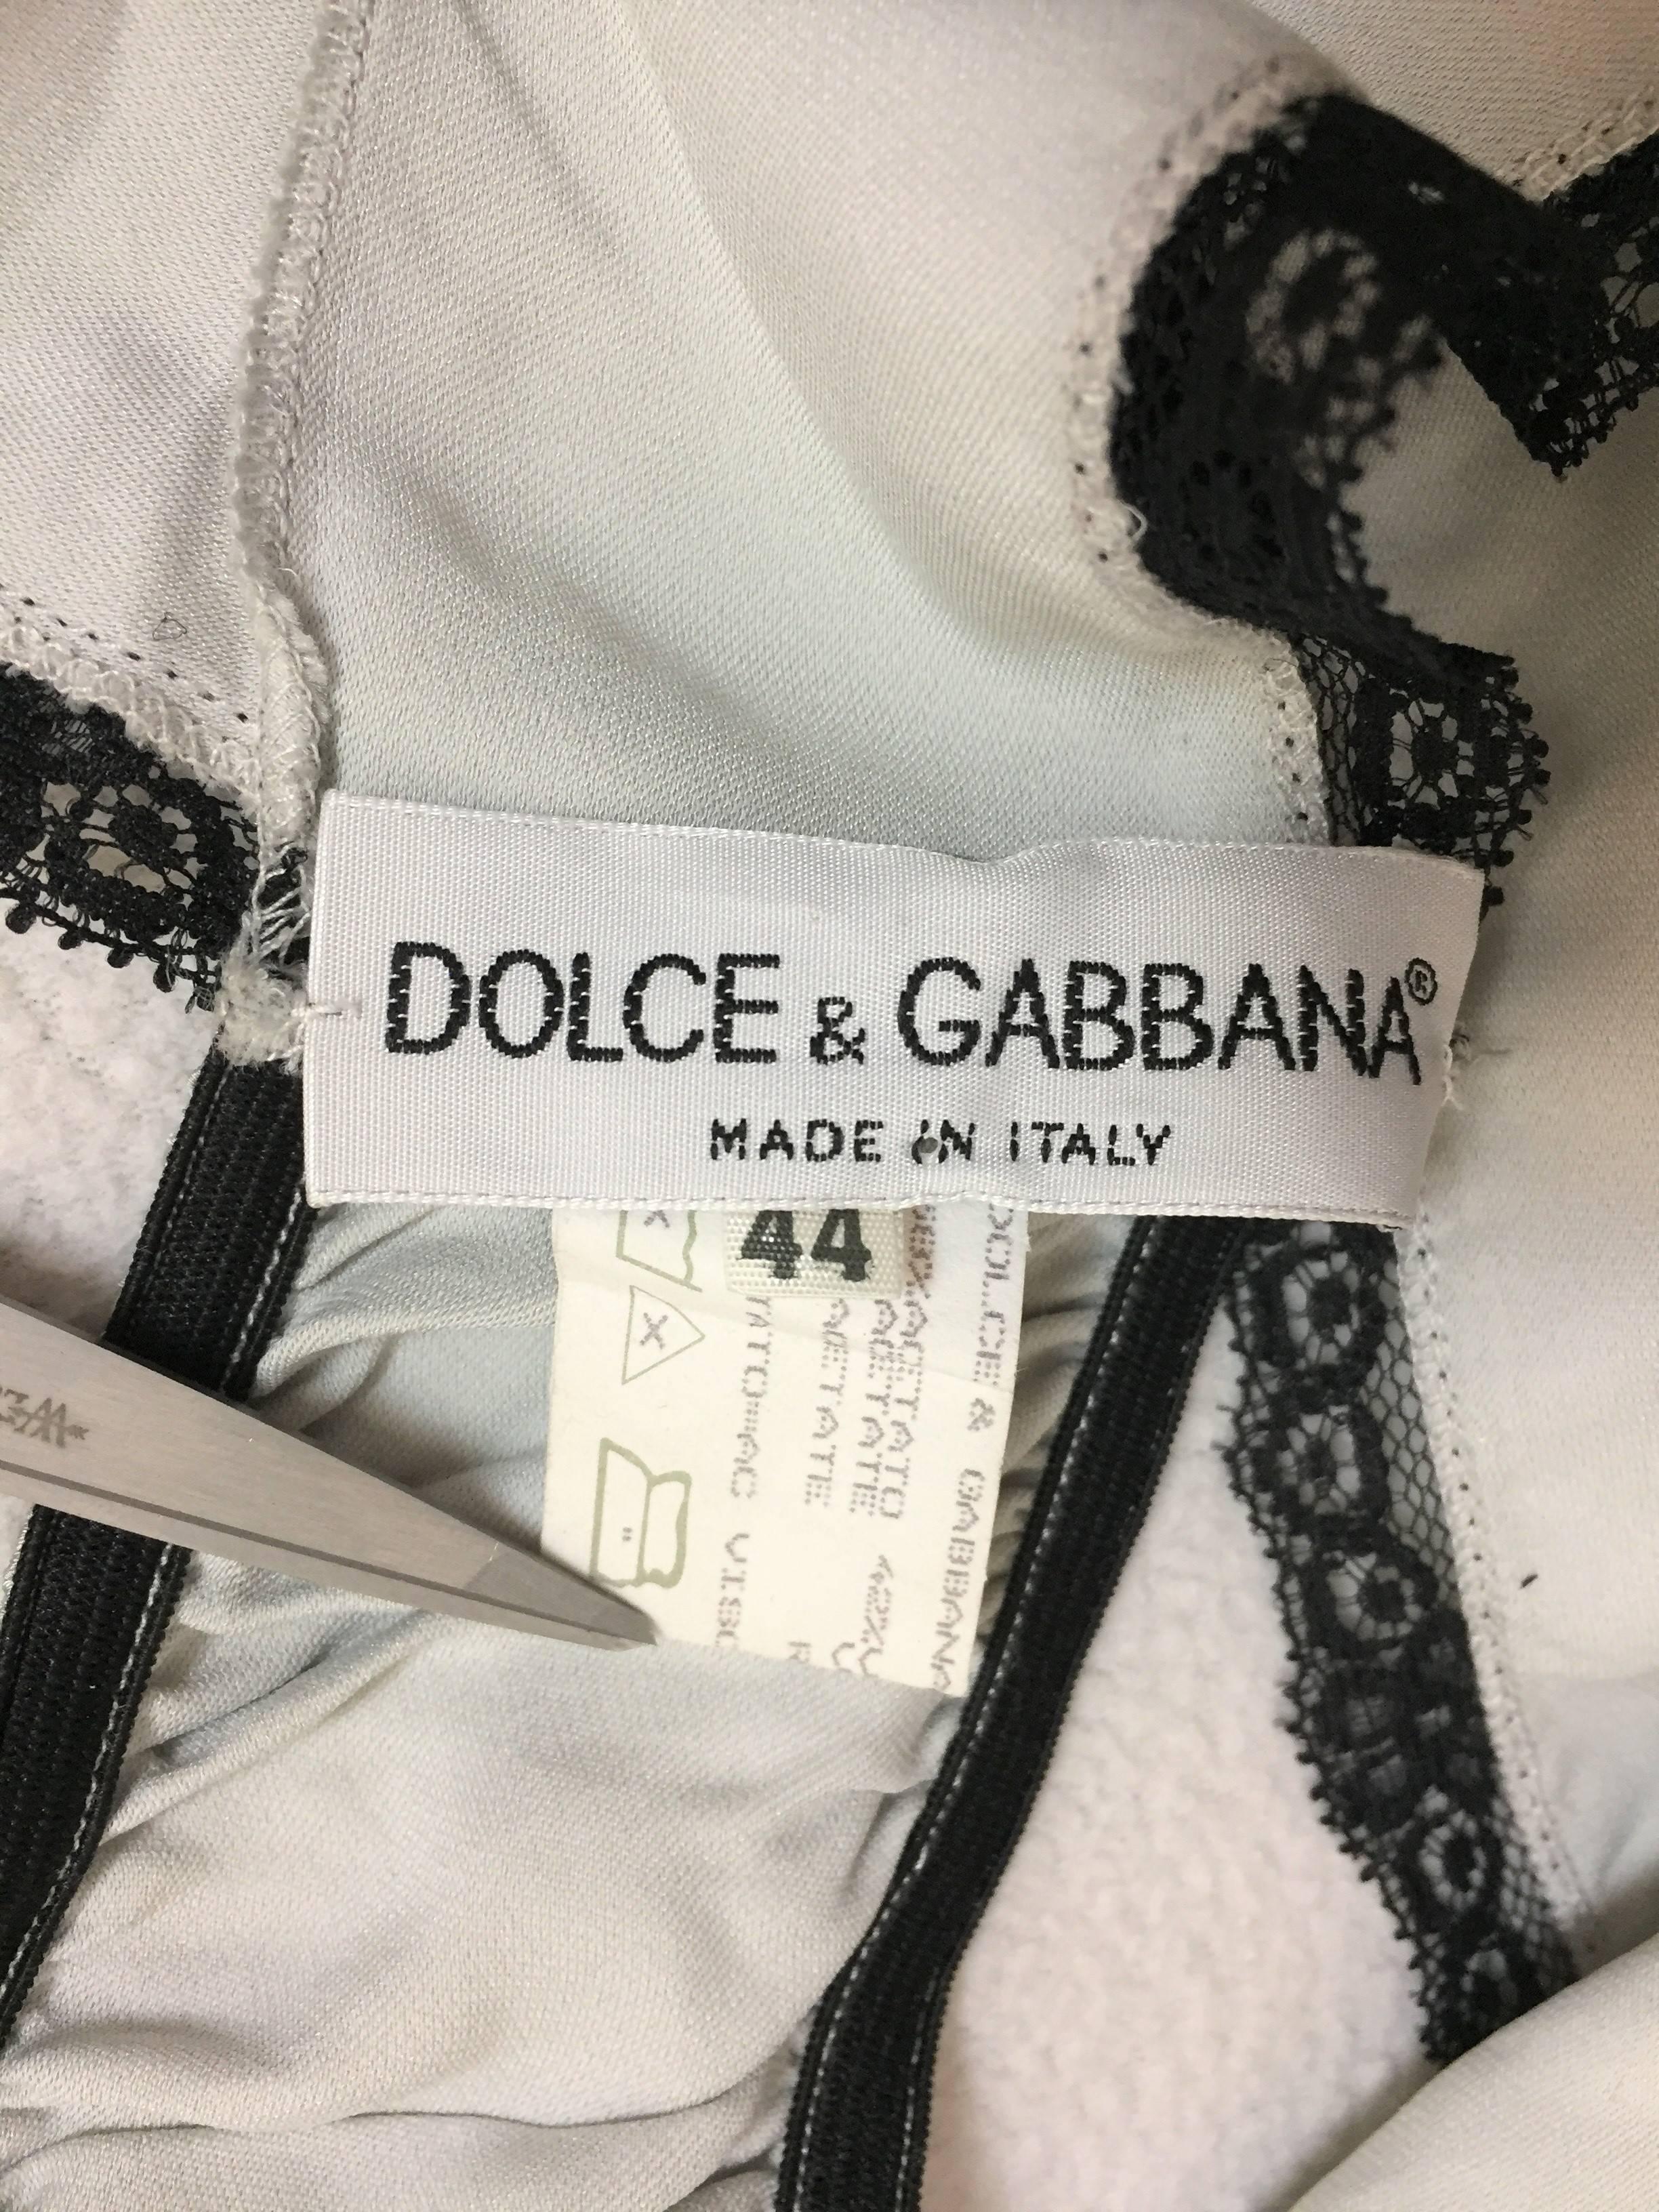 Women's S/S 1995 Dolce & Gabbana Silver Lace Cami Crop Top w/ Charm